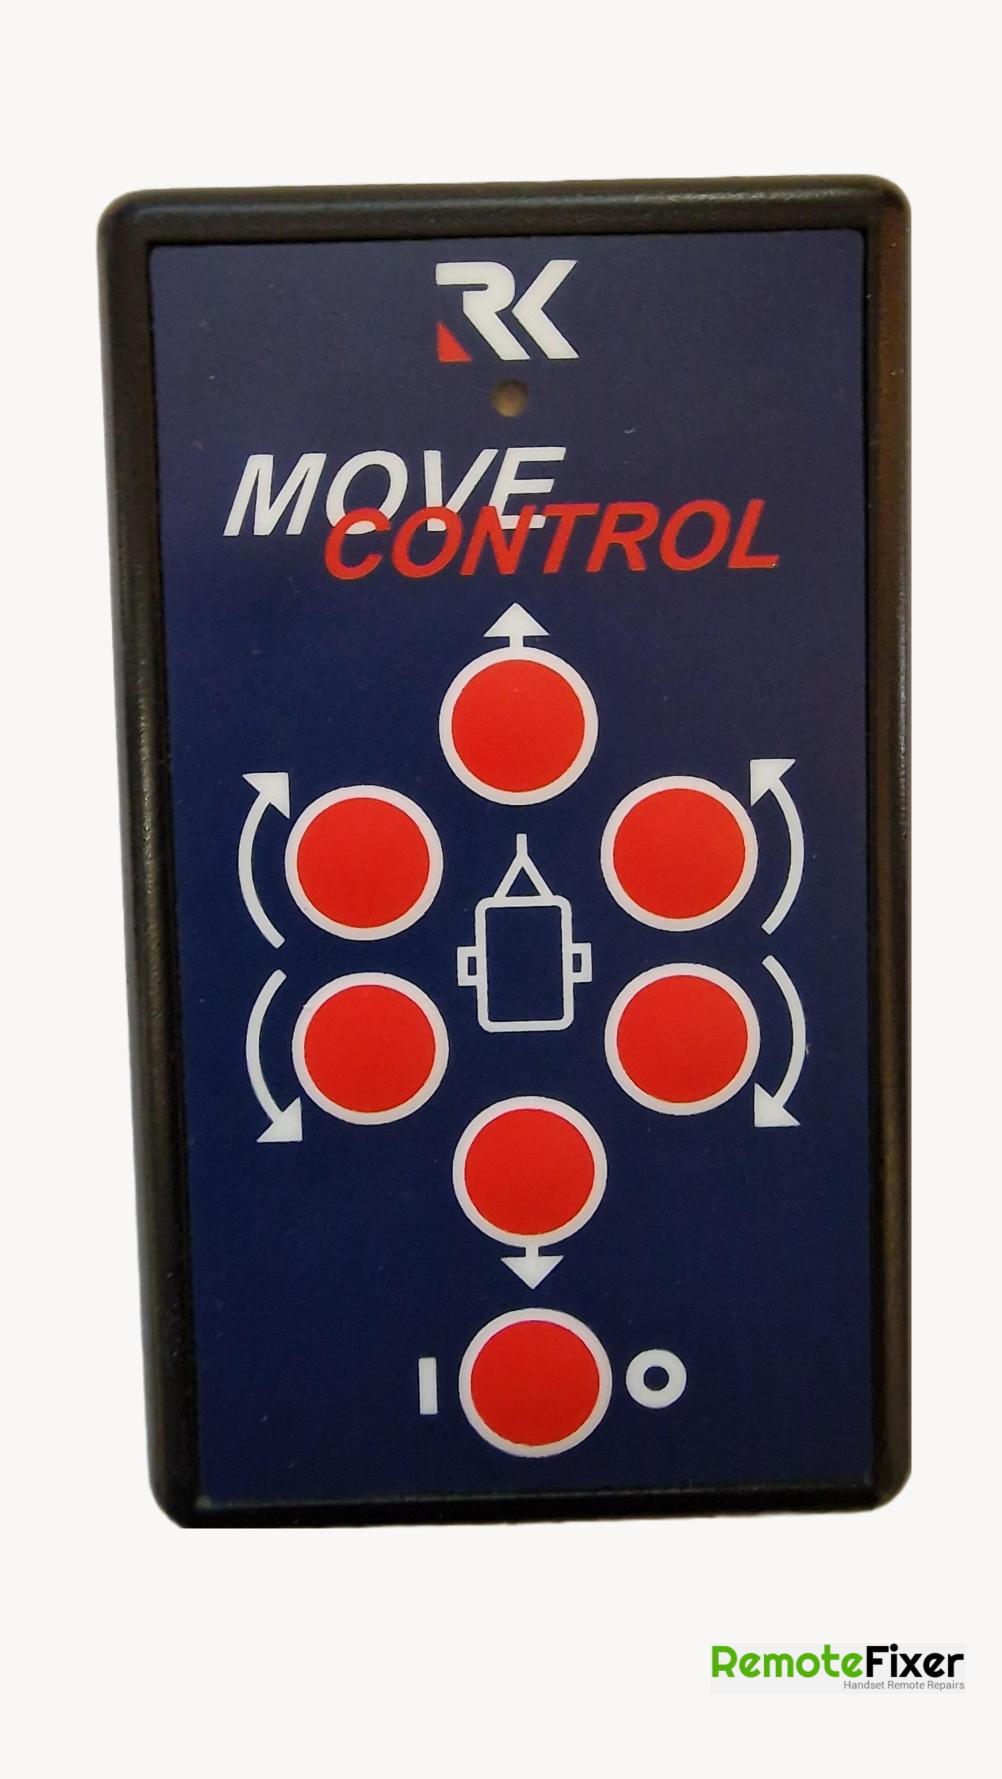 Reich RK Move Control 527-0521 Remote Control - Front Image